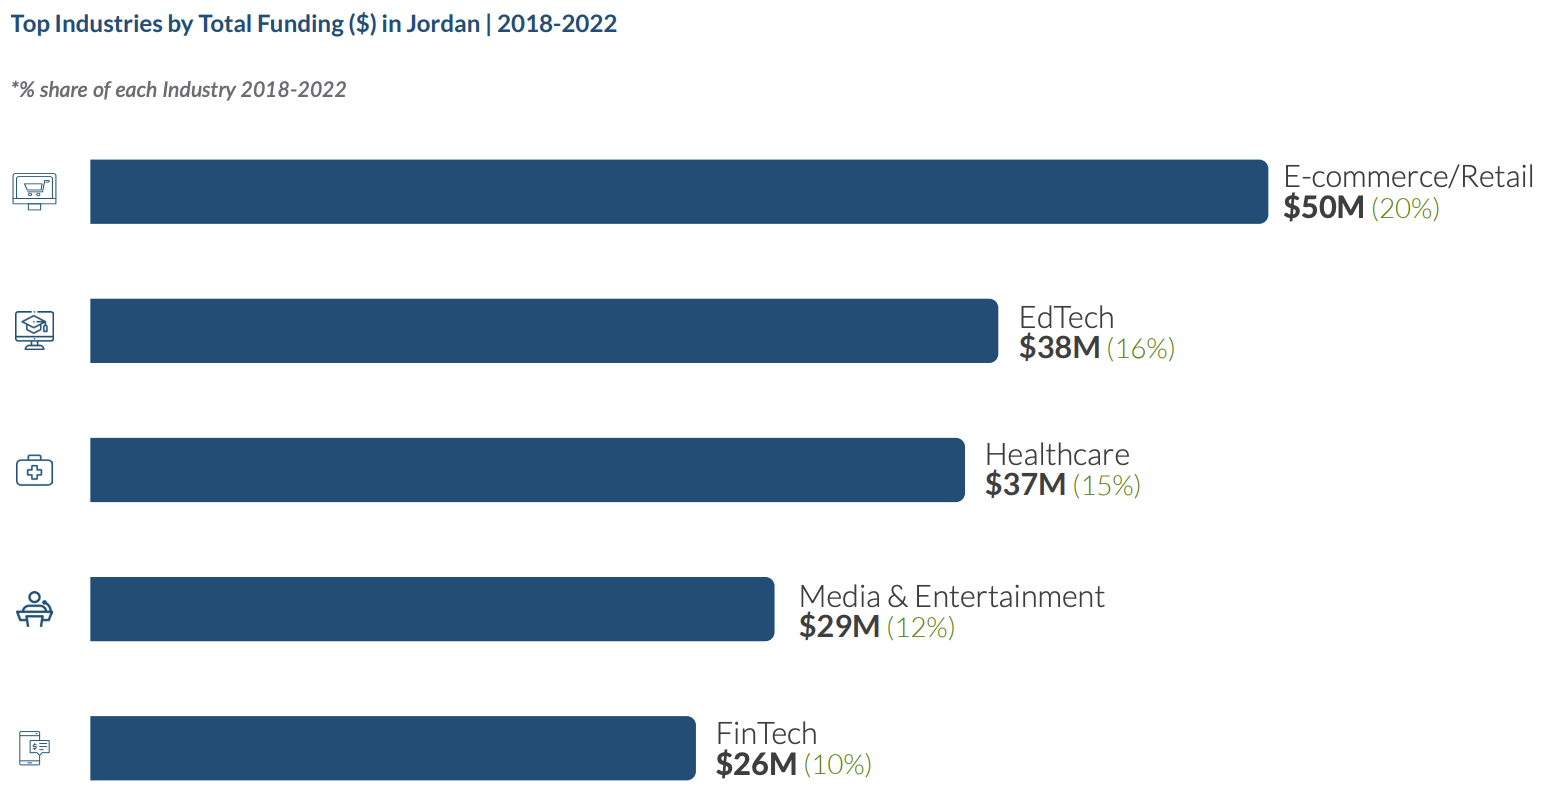 Top industries by total funding (US$) in Jordan, 2018-2022, Source: Jordan Venture Investment Report 2018-2022, Magnitt, the Ministry of Digital Economy and Entrepreneurship of Jordan, Nov 2023